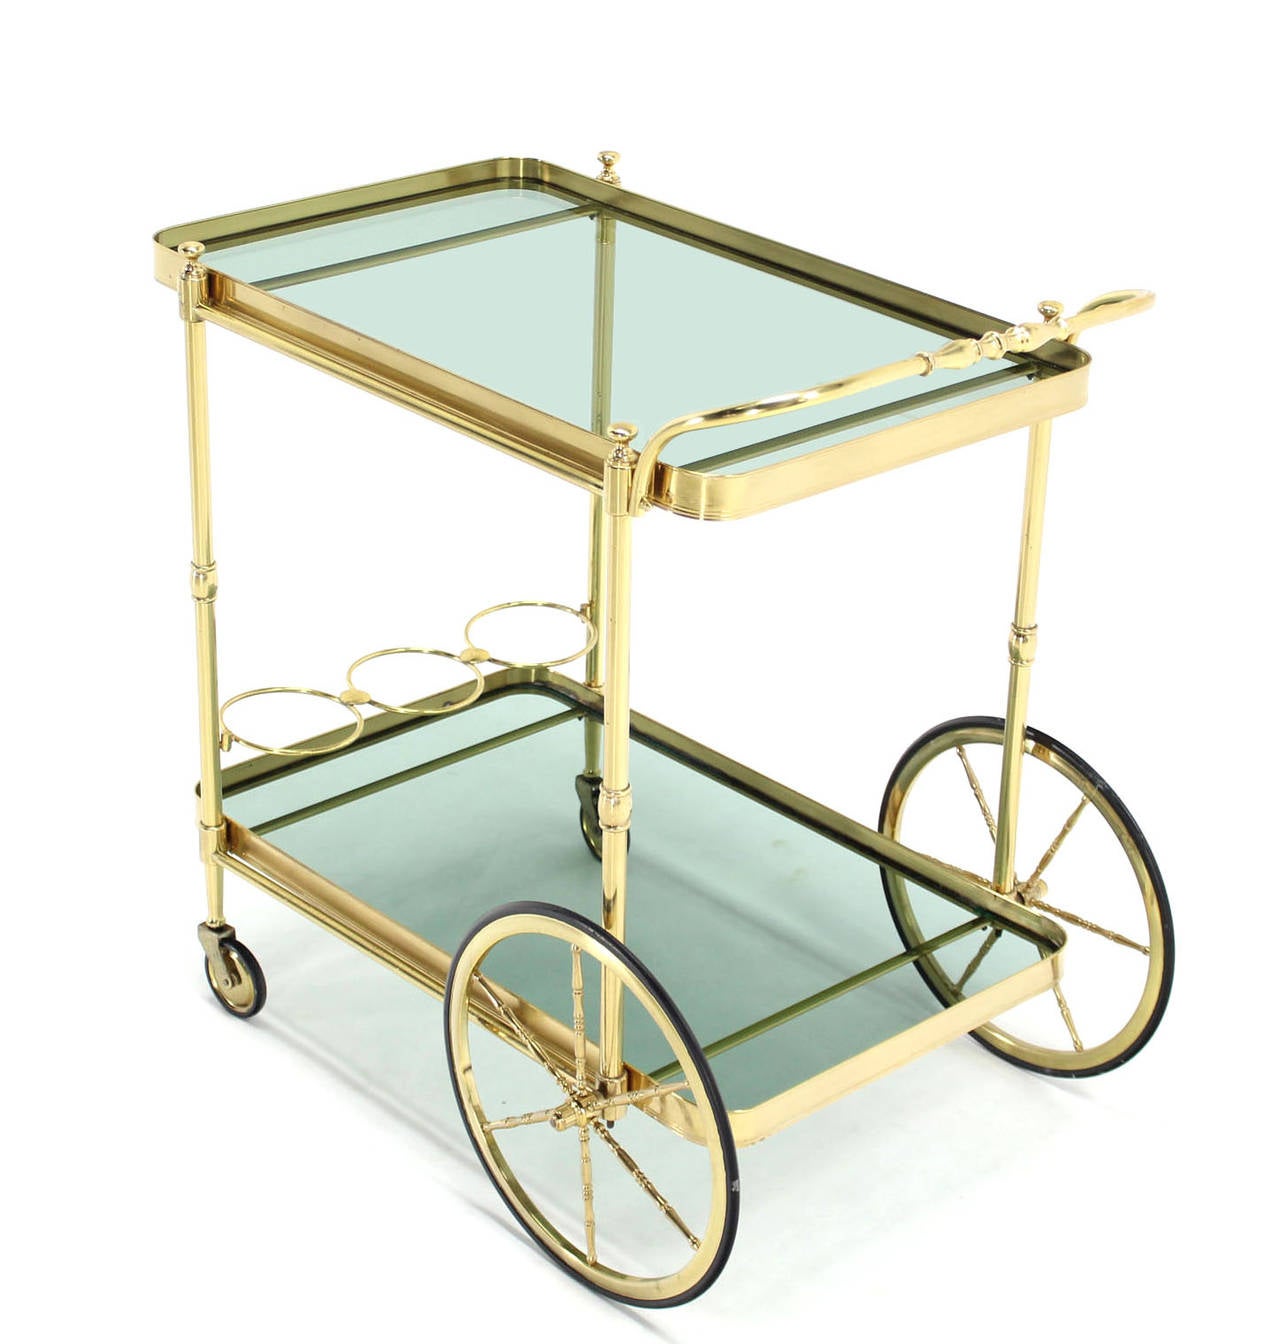 Very nice looking brass and green shade glass shelves tea cart.